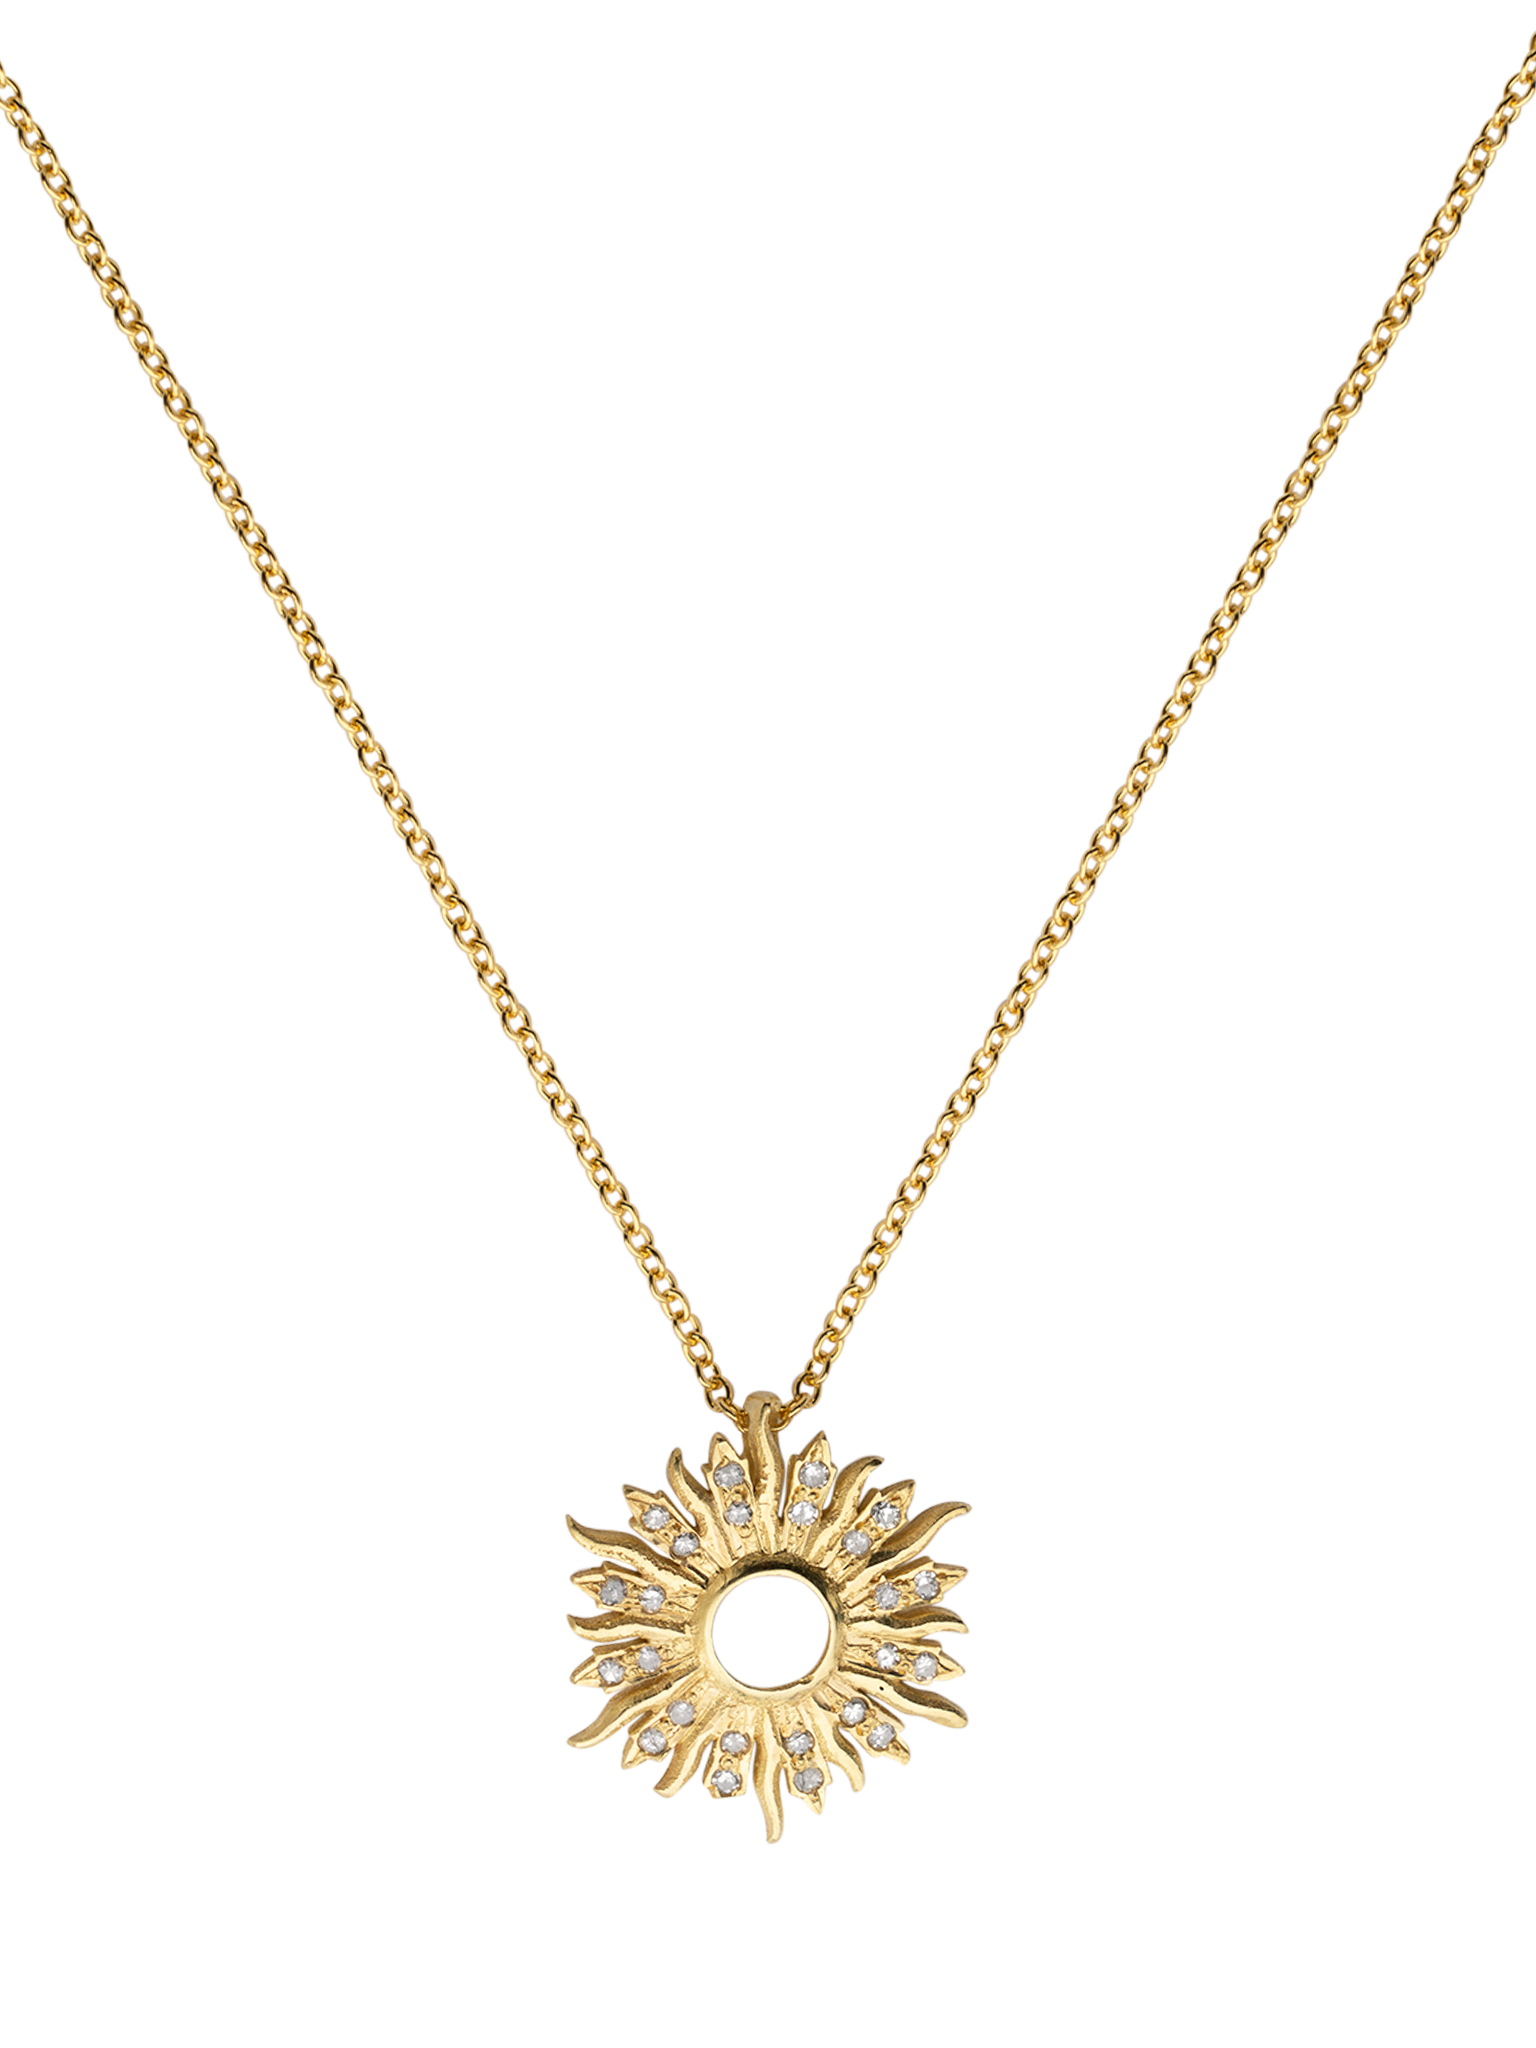 Small diamond sunburst necklace